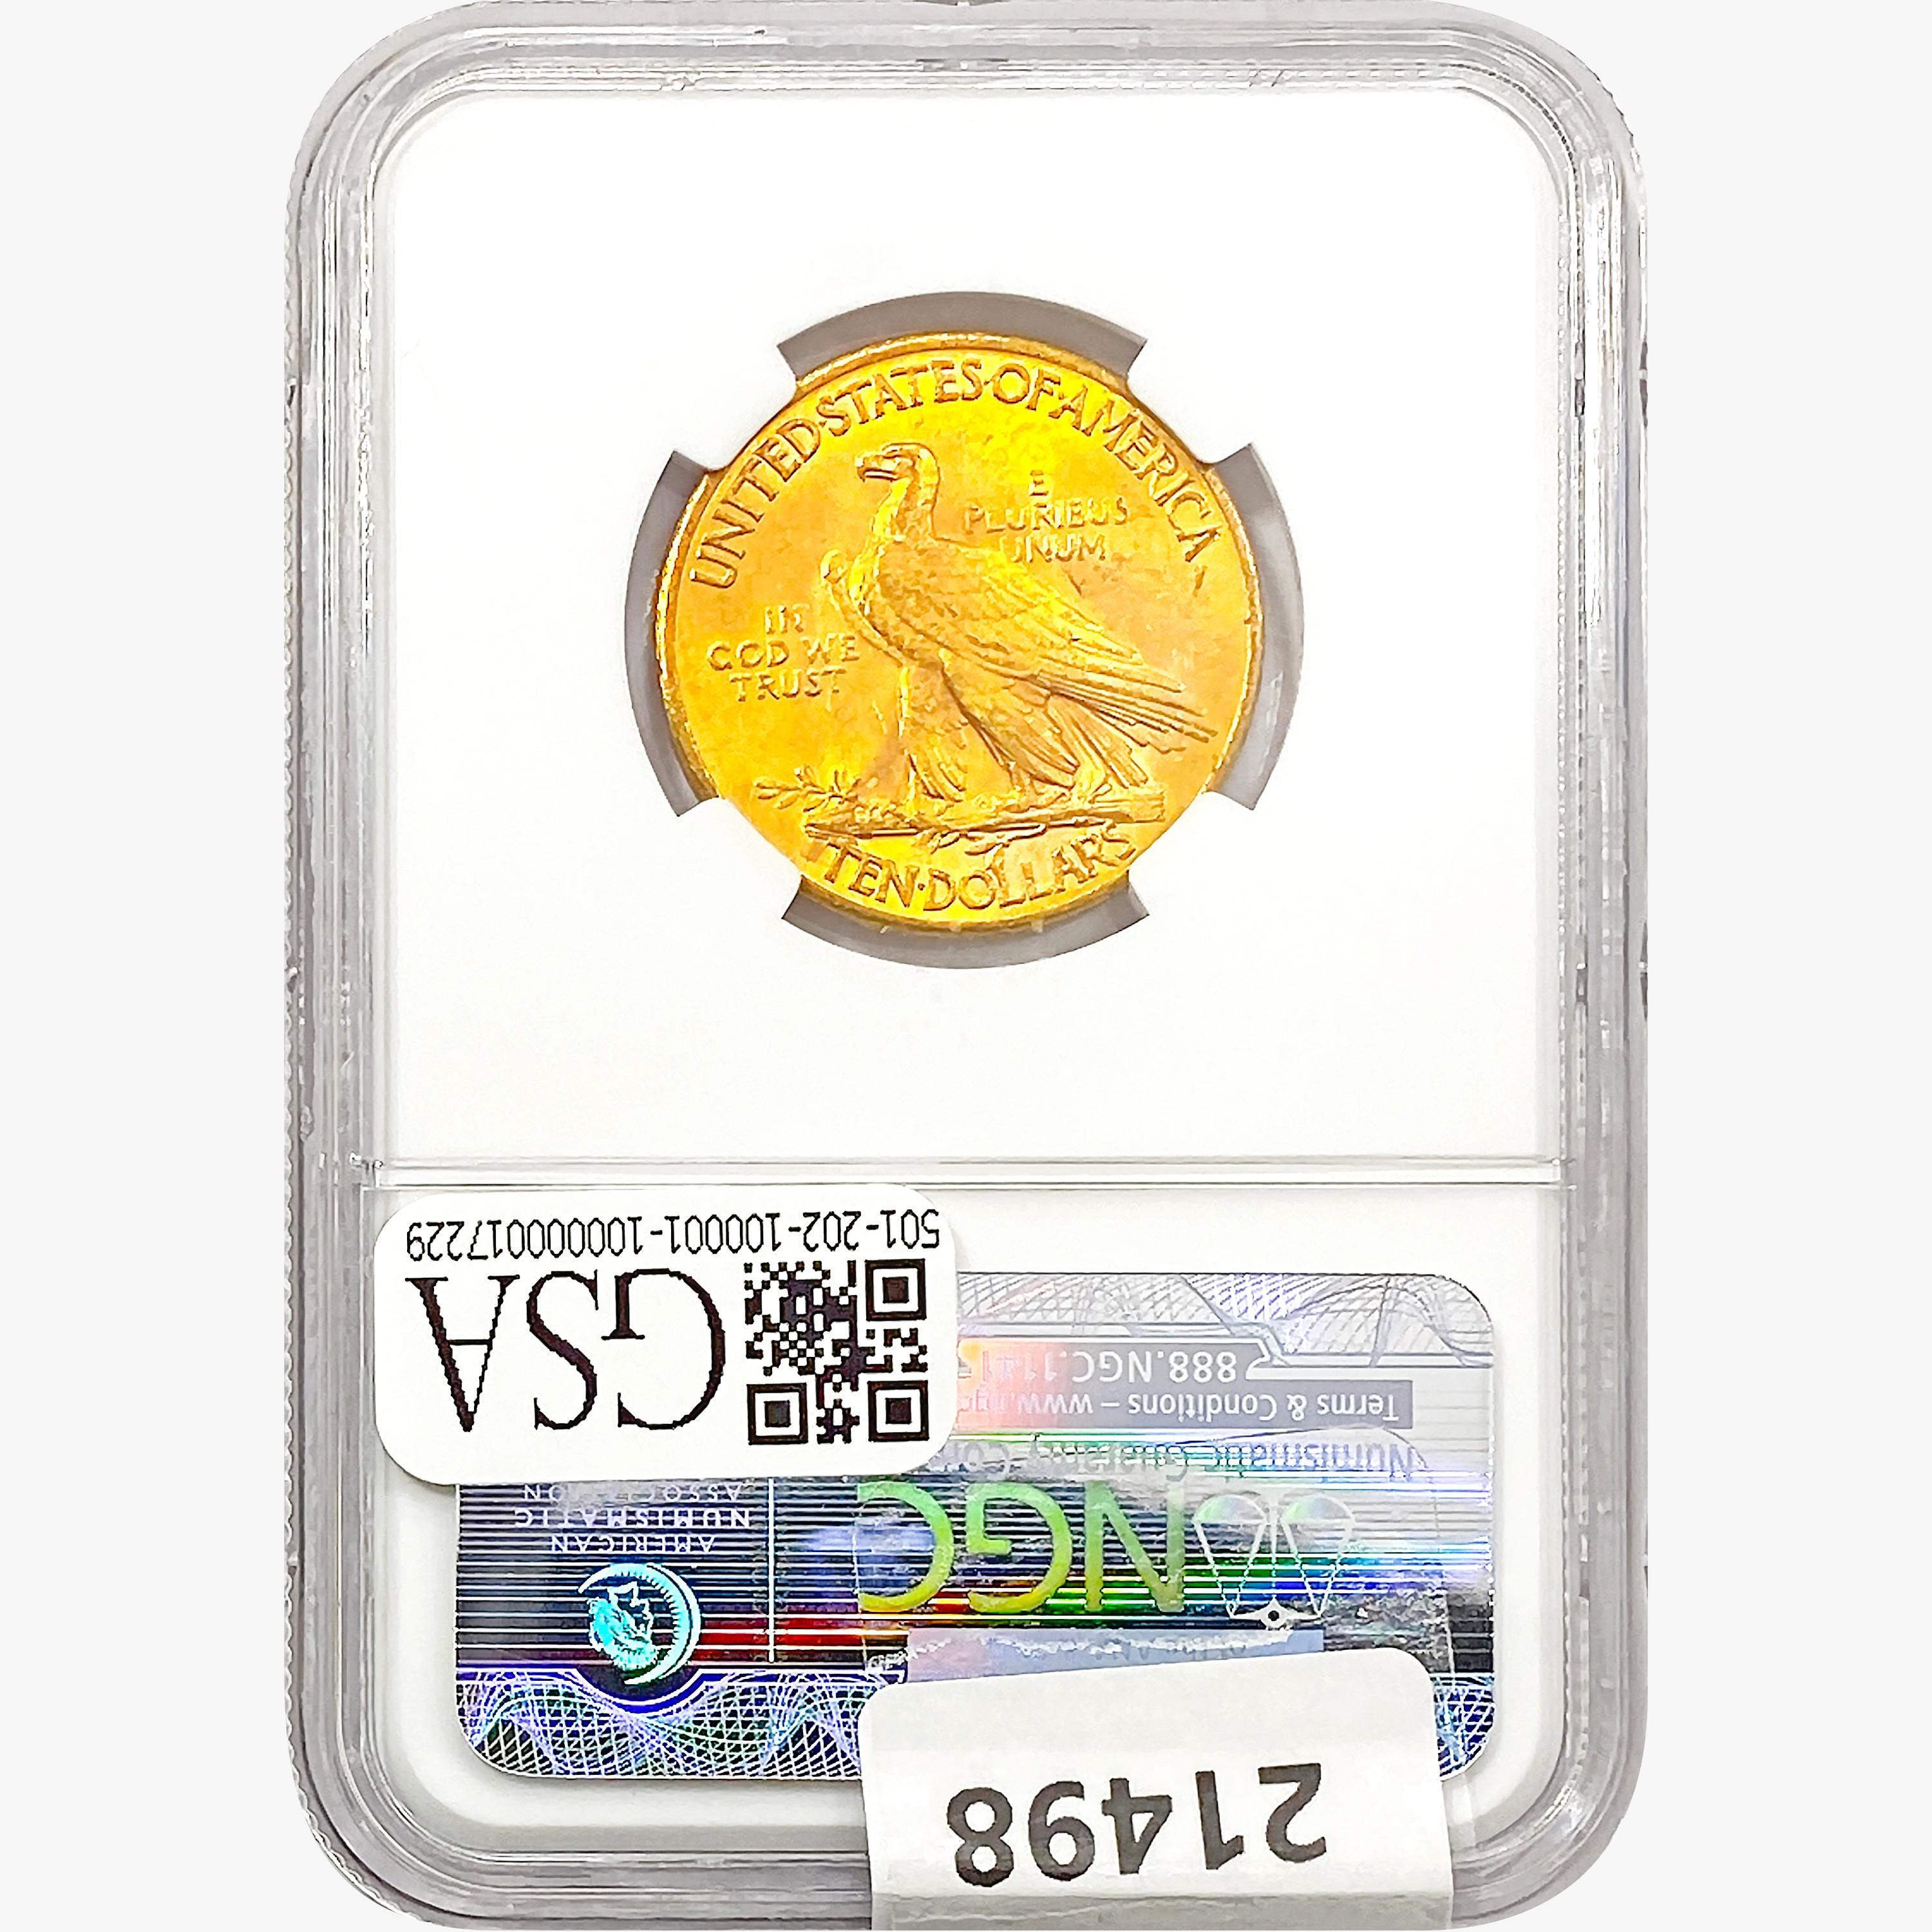 1926 $10 Gold Eagle NGC MS63